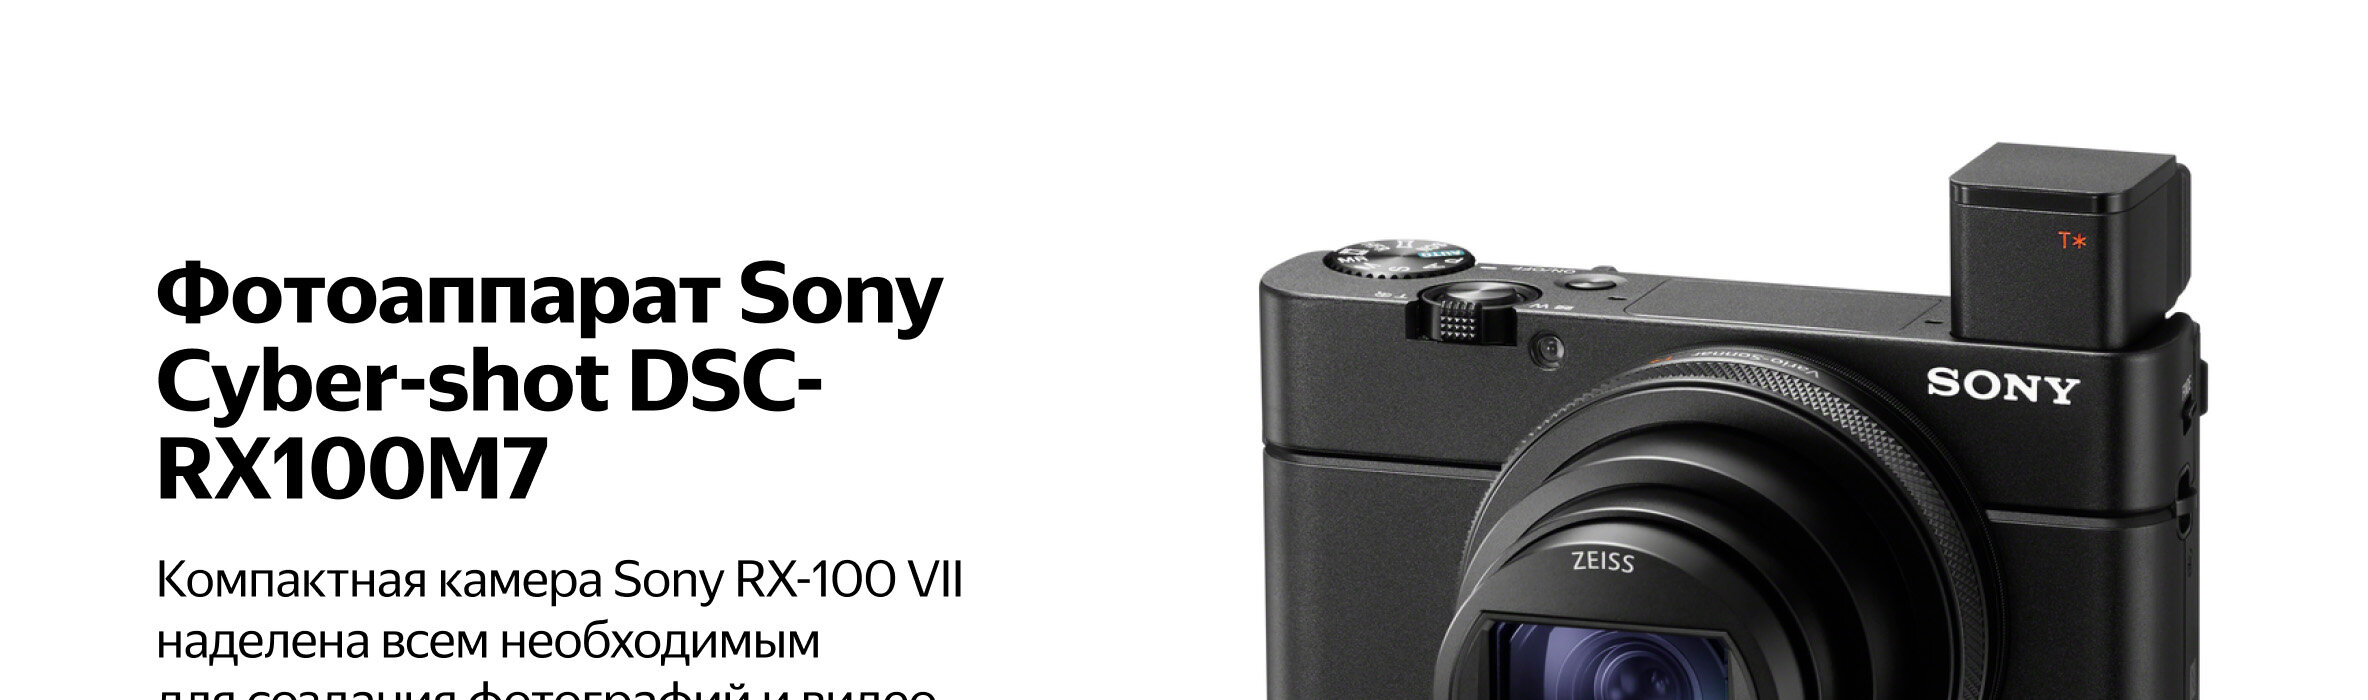 Фотоаппарат Sony Cyber-shot DSC-RX100M7 — купить в интернет 